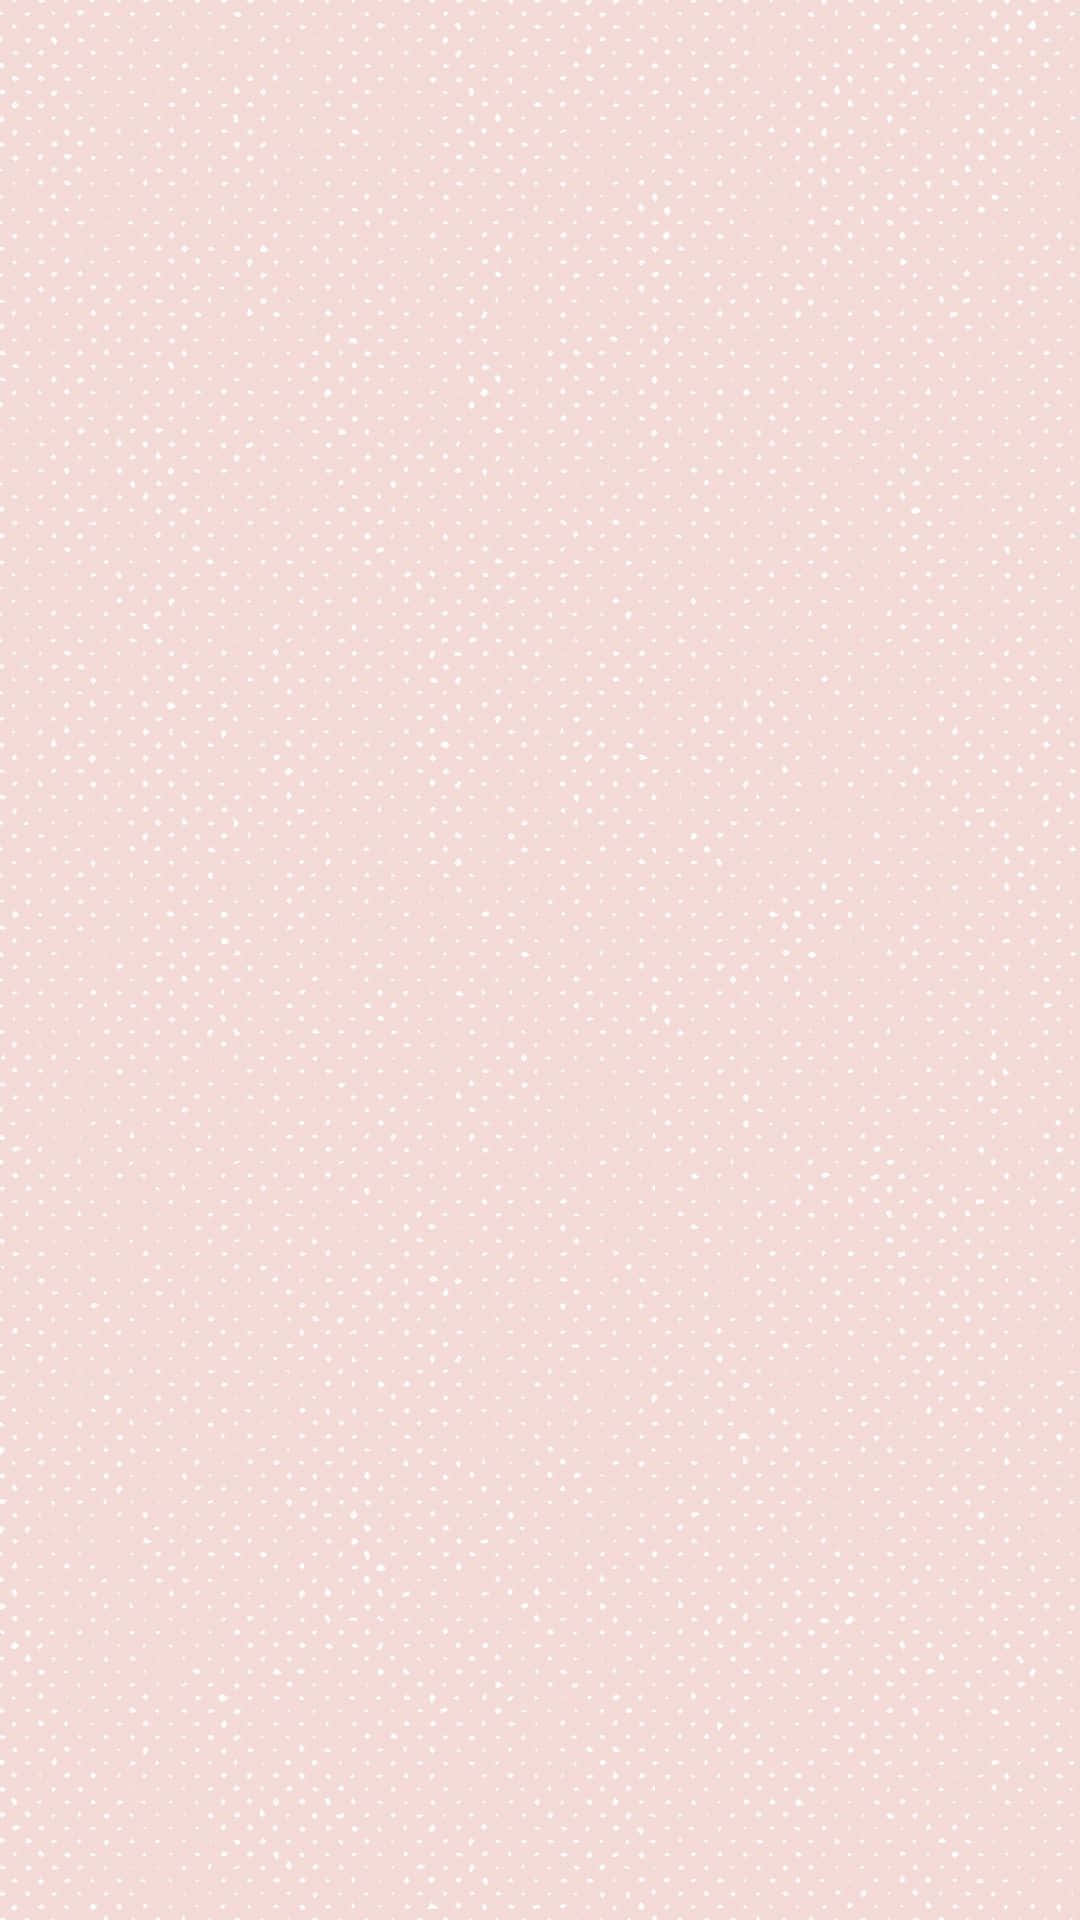 Blush Pink Polka Dot Background Wallpaper